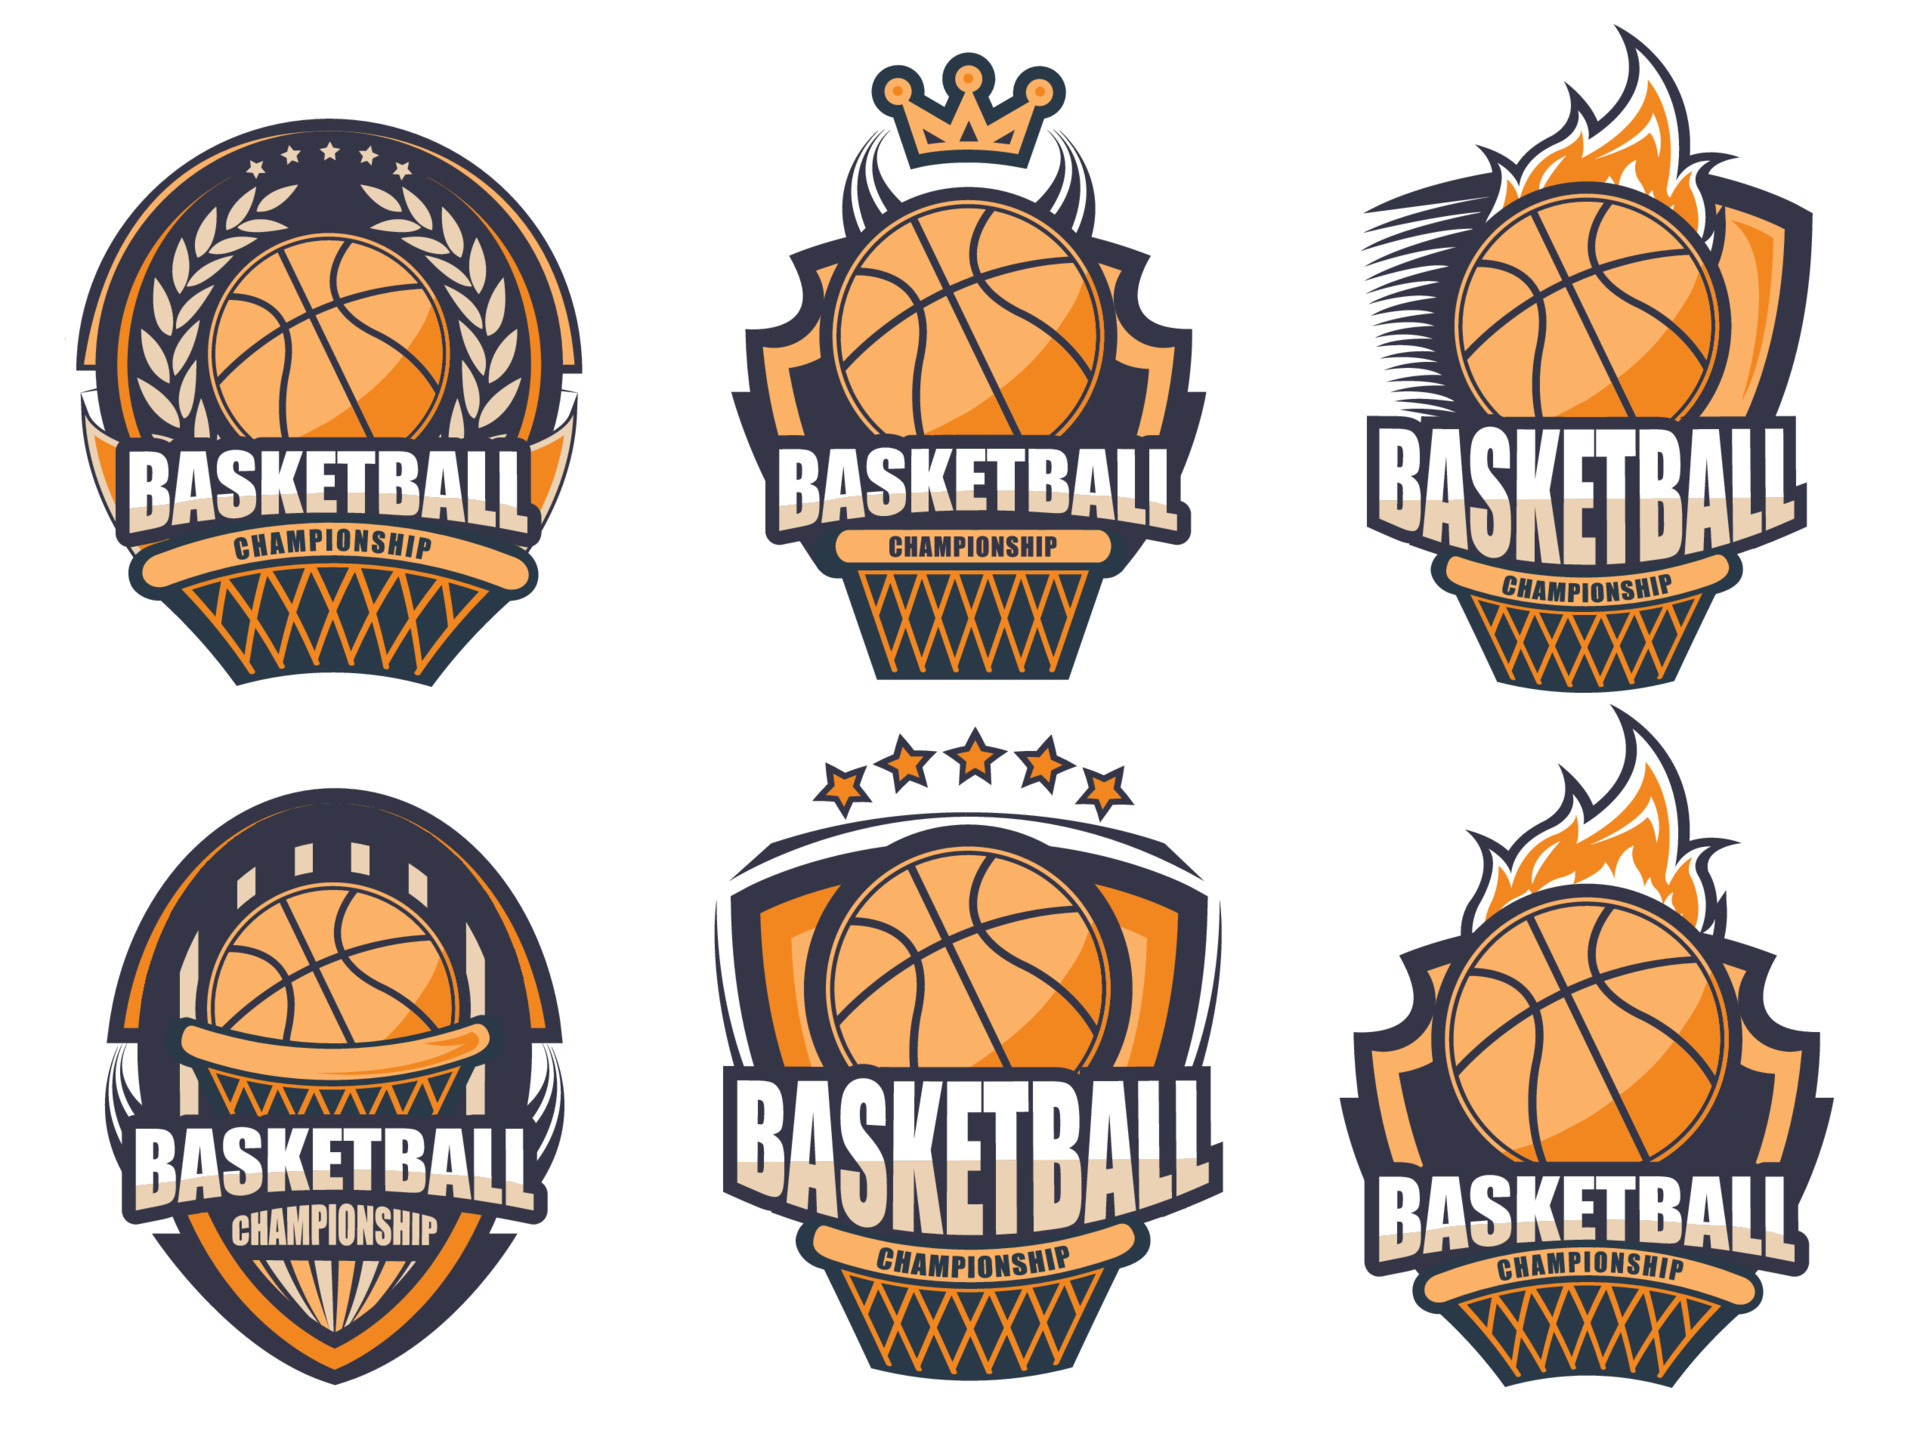 Basketball championship logo set and design Vector Image